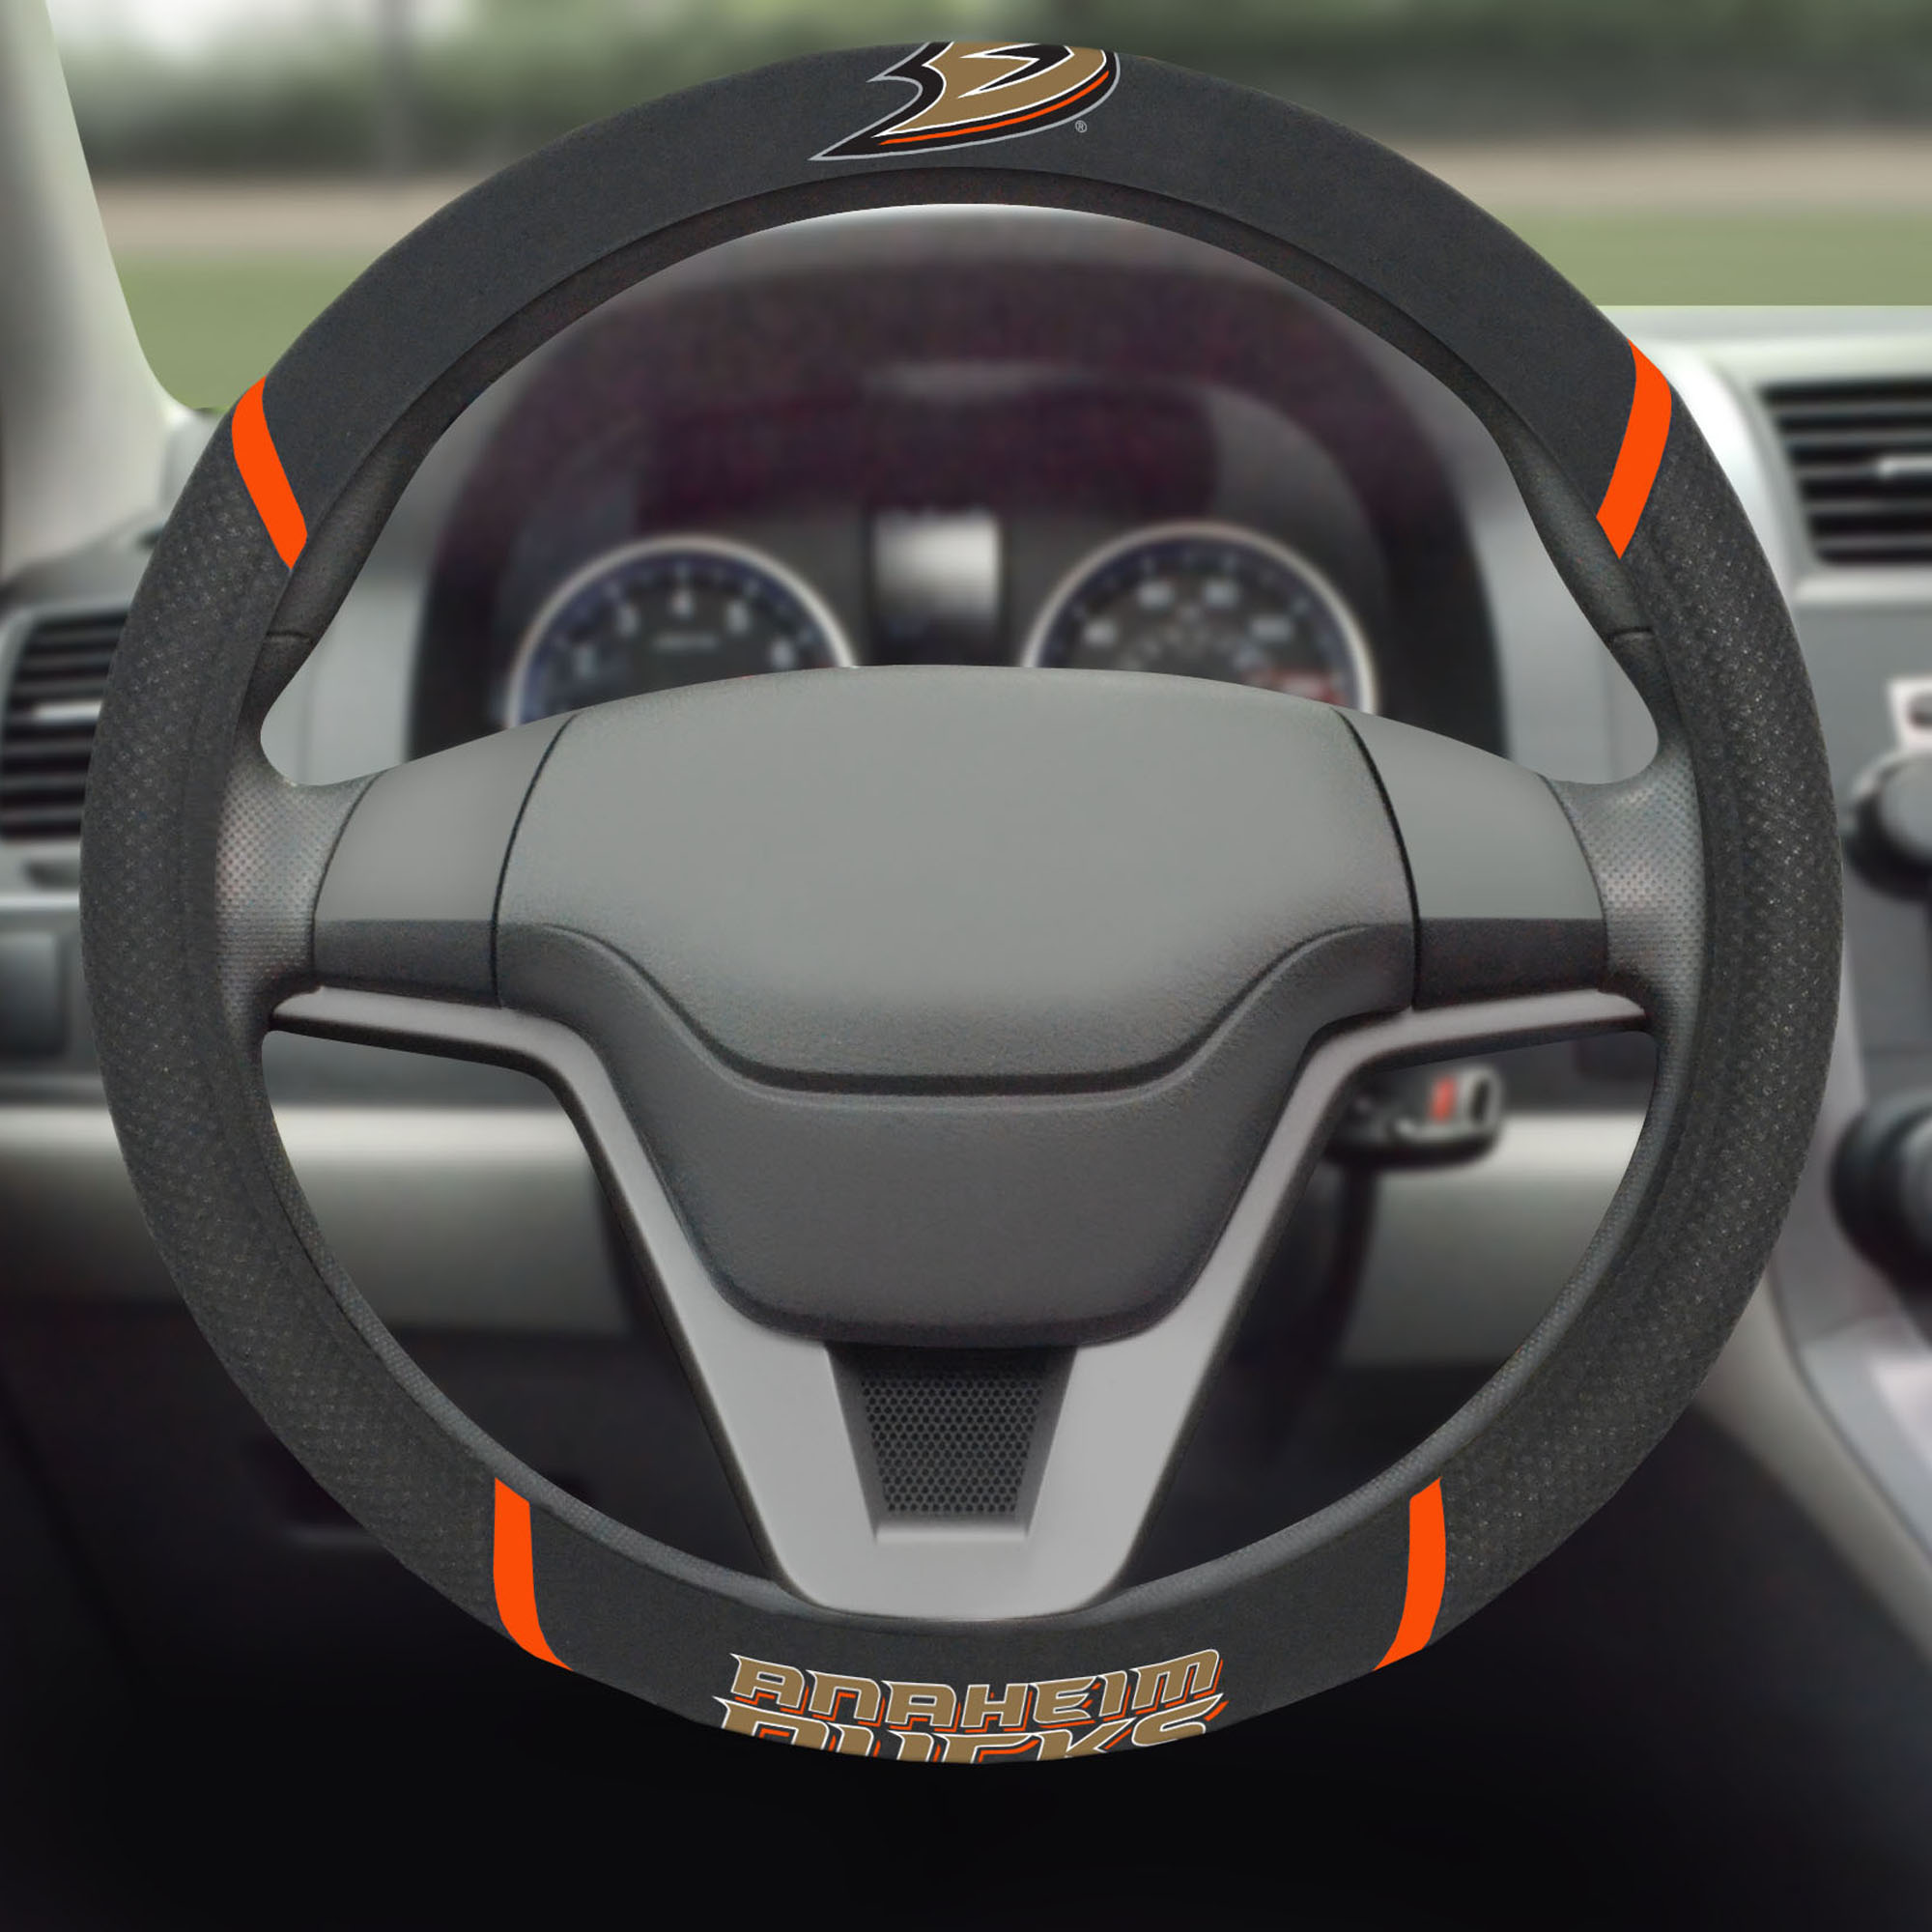 Anaheim Ducks Steering Wheel Cover 15"x15" - image 2 of 2